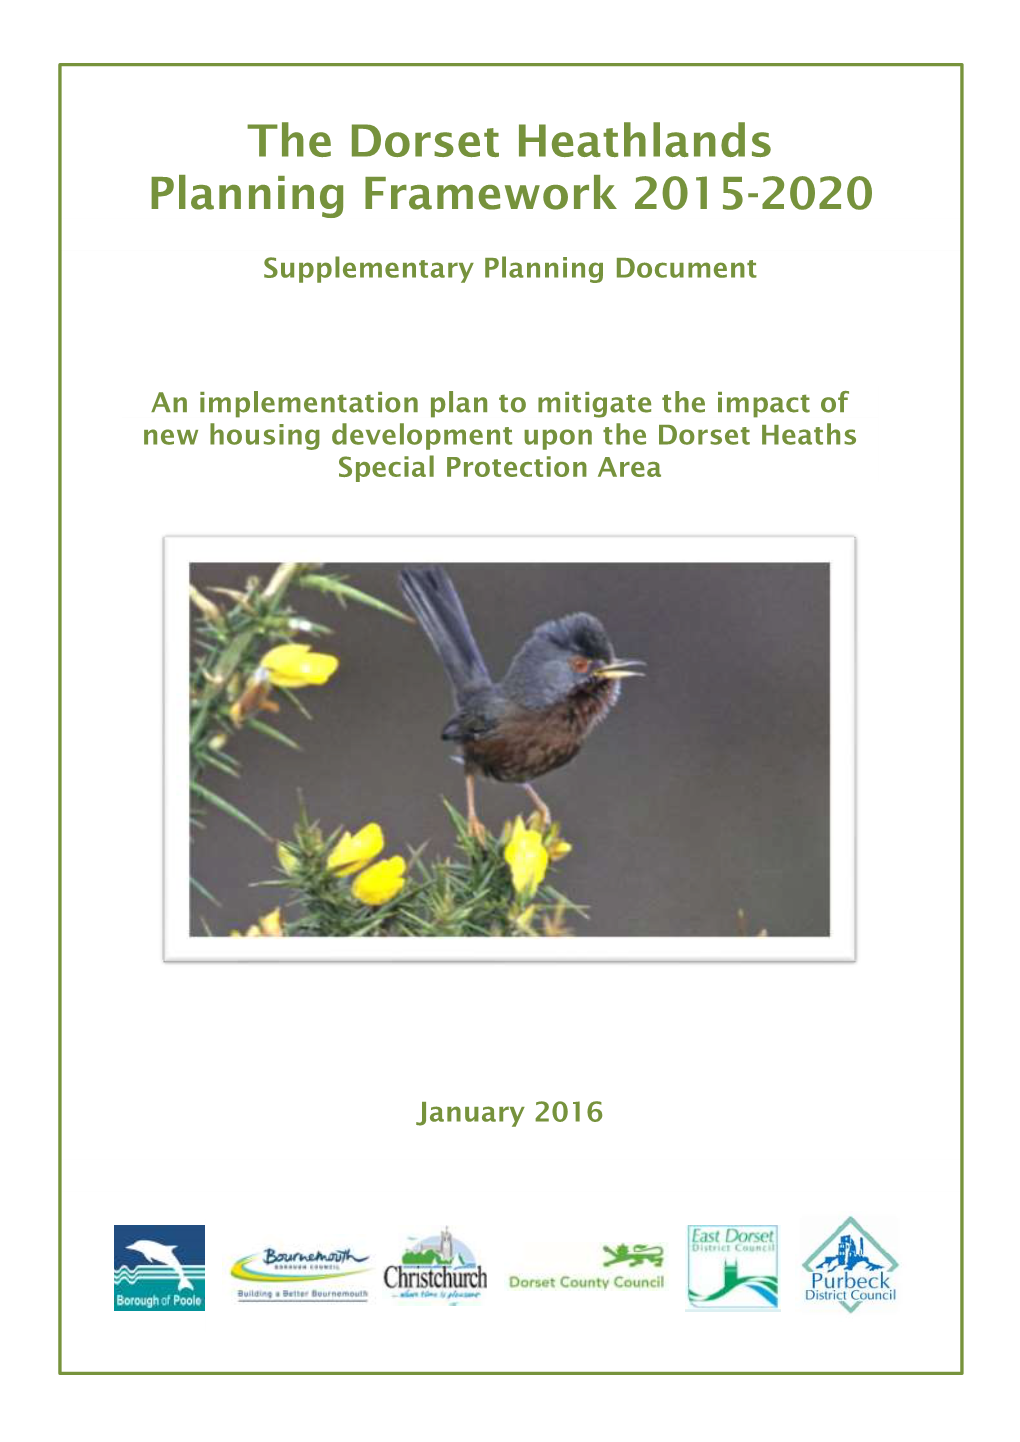 The Dorset Heathlands Planning Framework 2015-2020